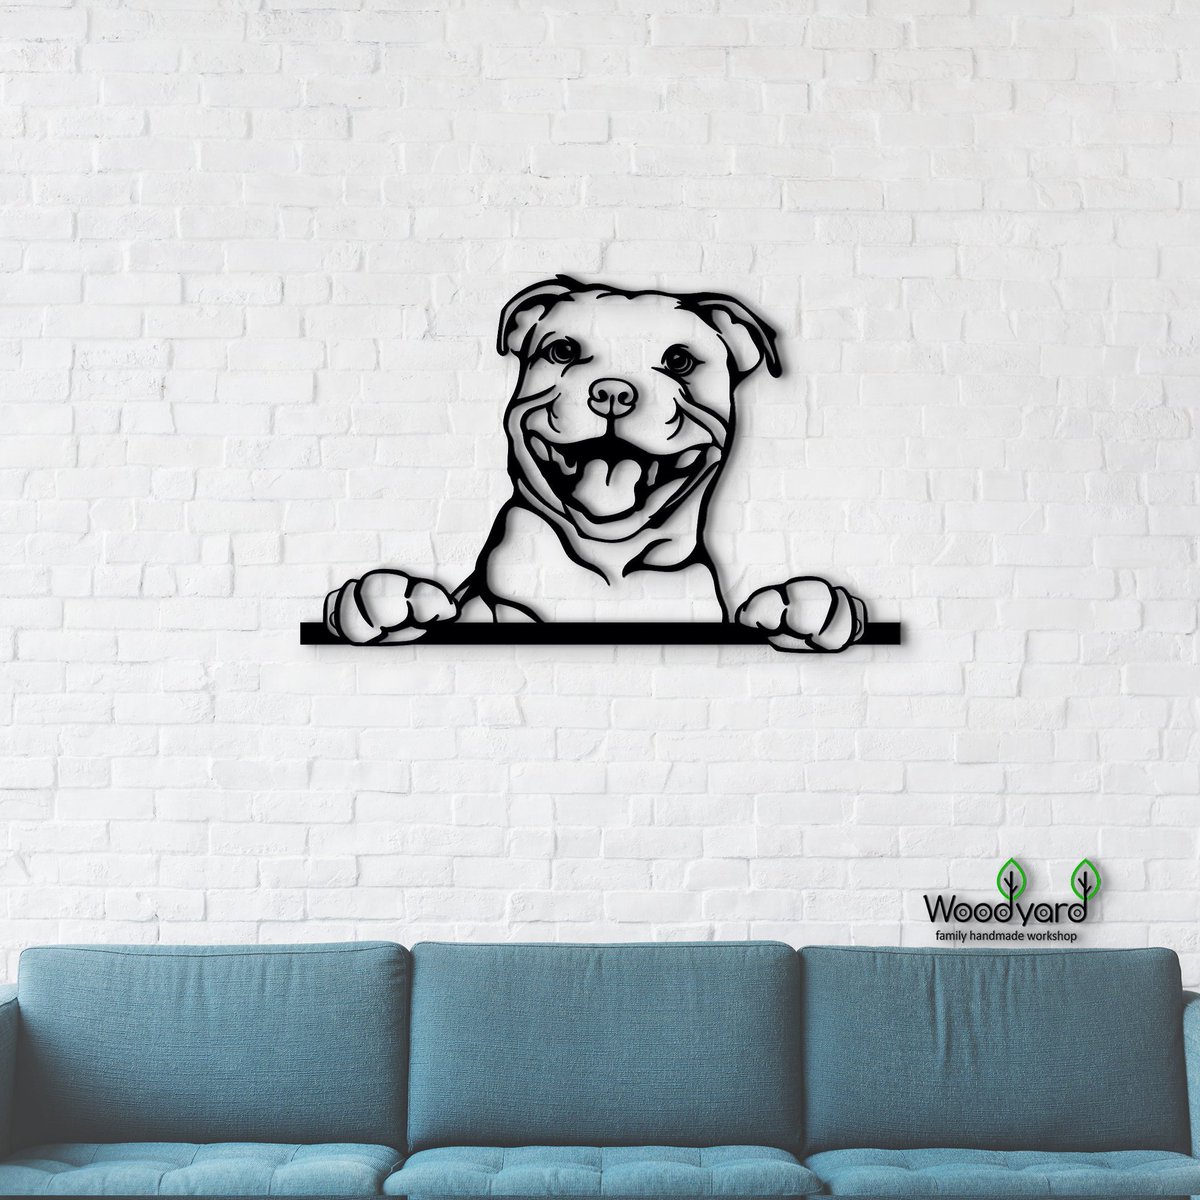 Staffordshire Bull Terrier Wall Decor - Unique Gift for Dog Lovers #bedroom #animal #giftforfriend #dogmomgift #dogbirthday #customdogsign #peekingdogsign #DogsOnTwitter etsy.me/3yTZVF4